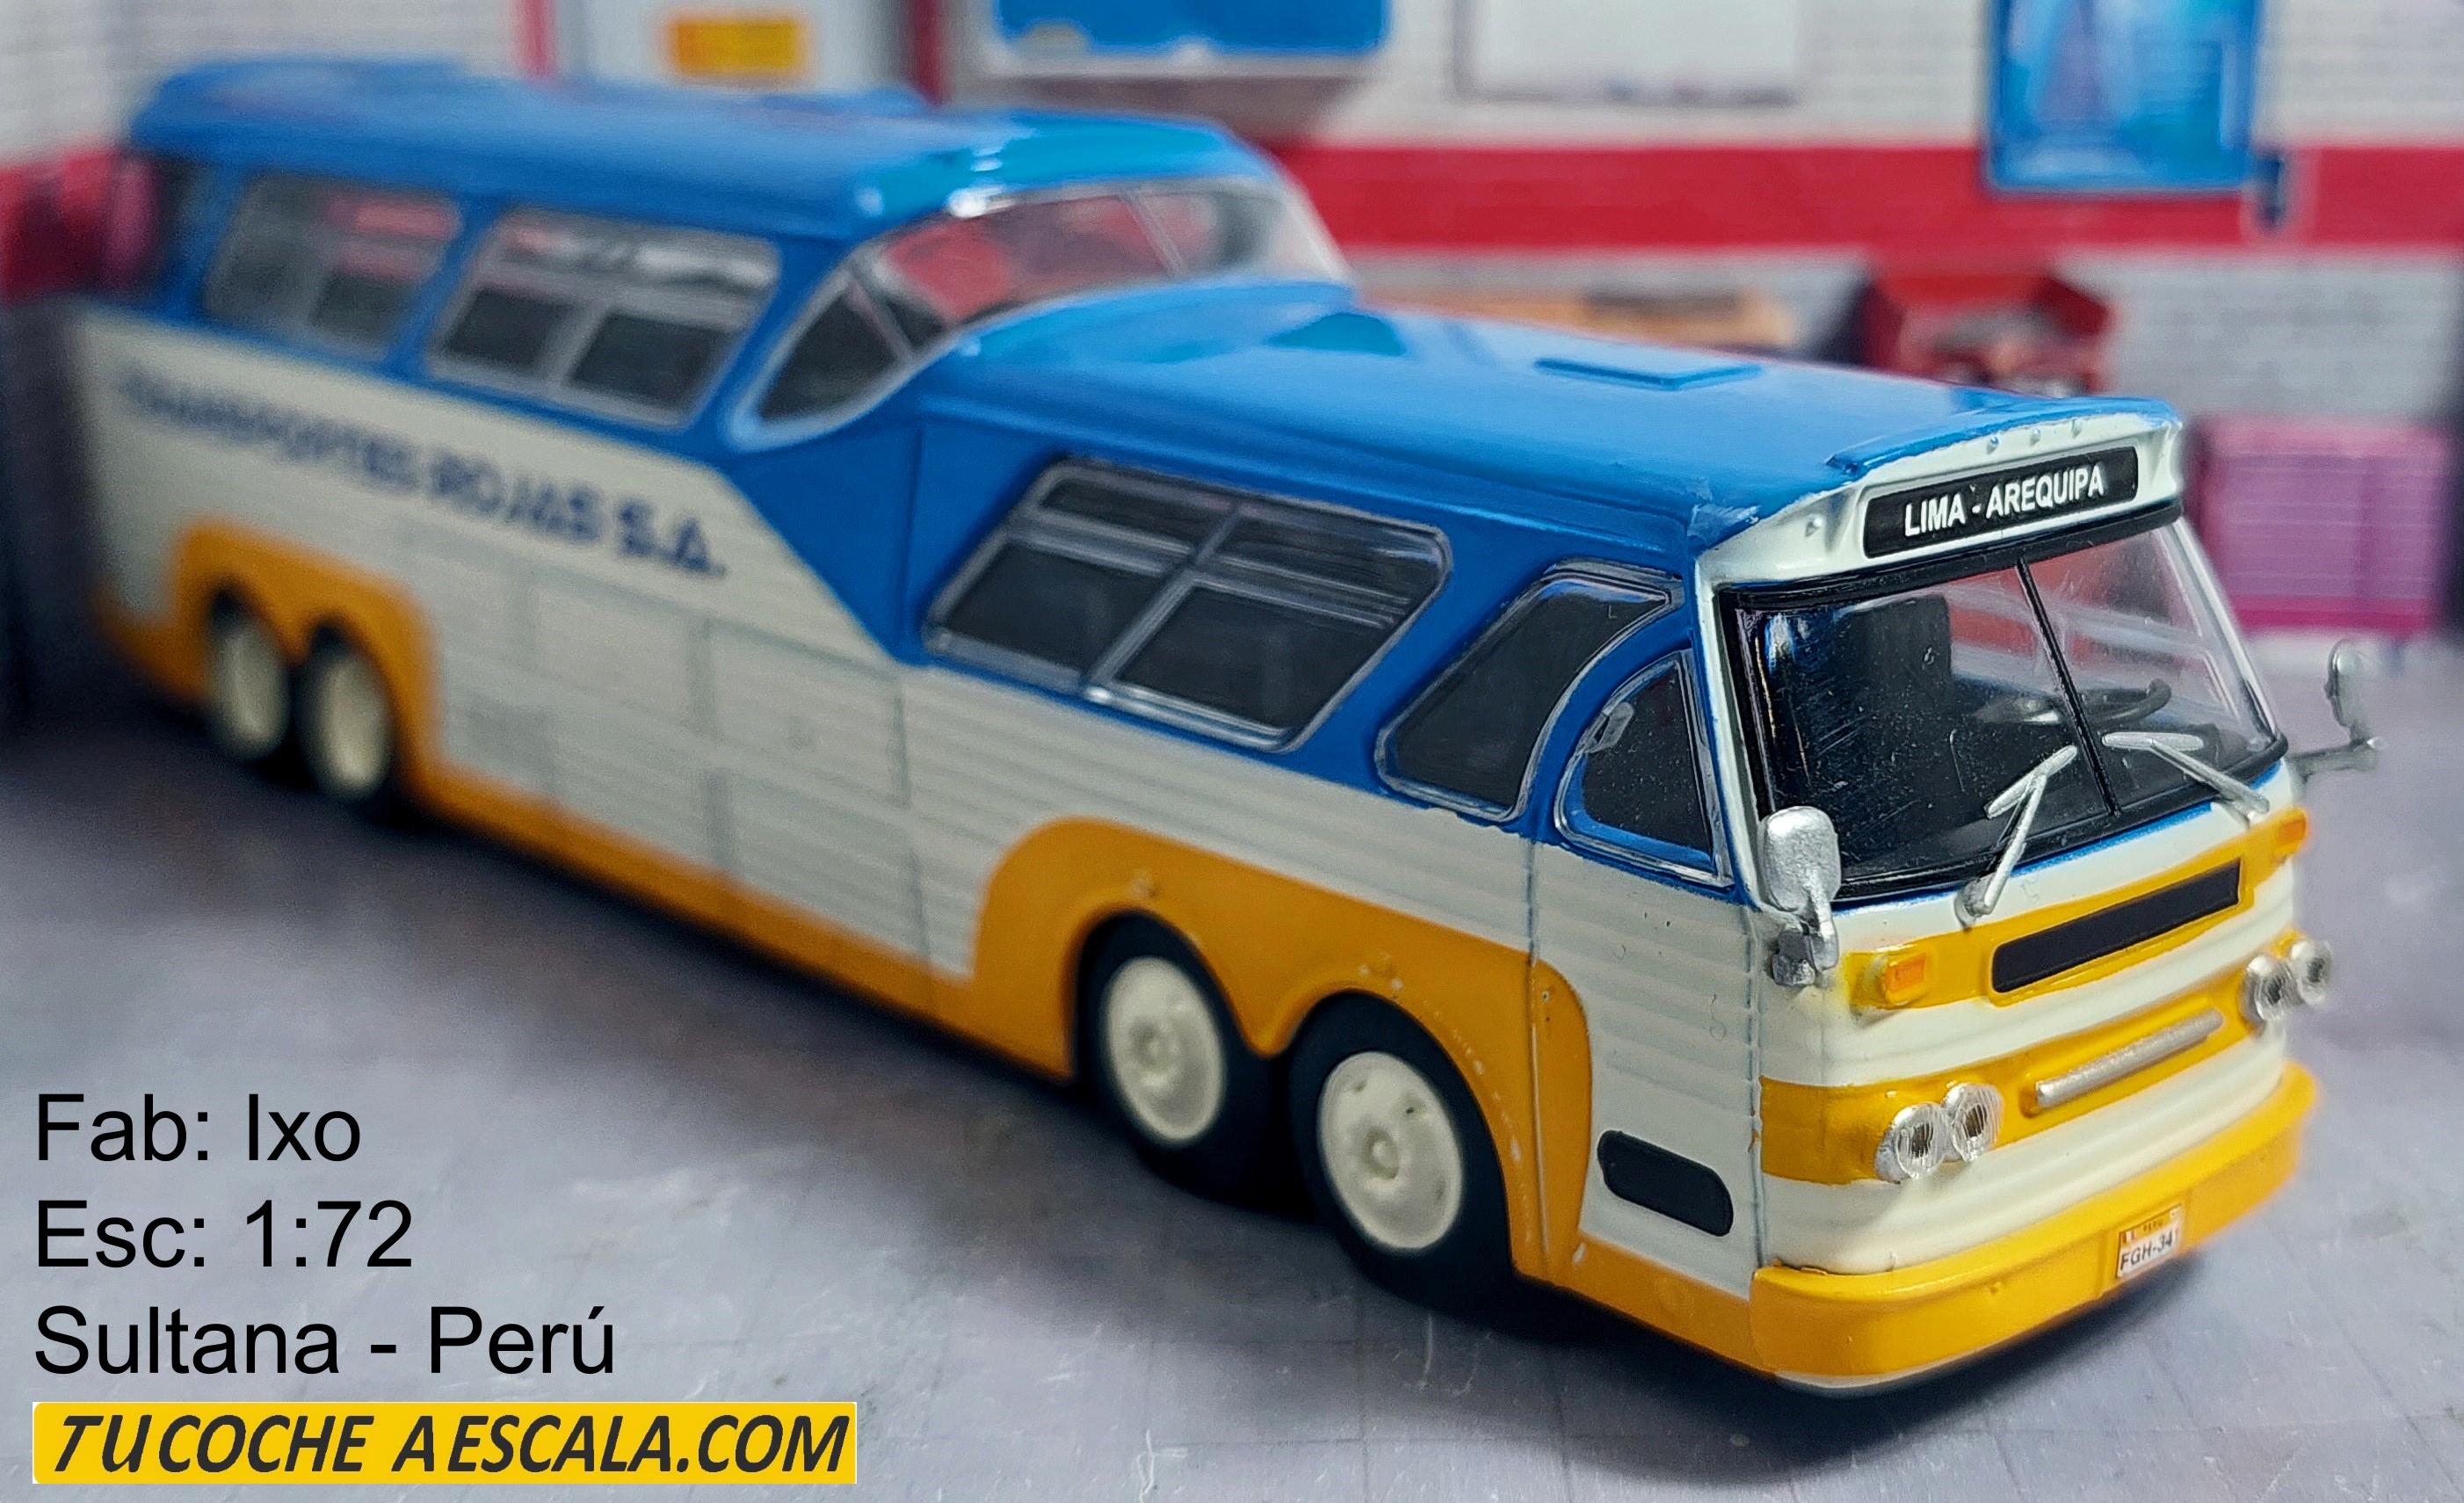 Bus Transmilenio Plastico Carro Medio Transporte Juguete